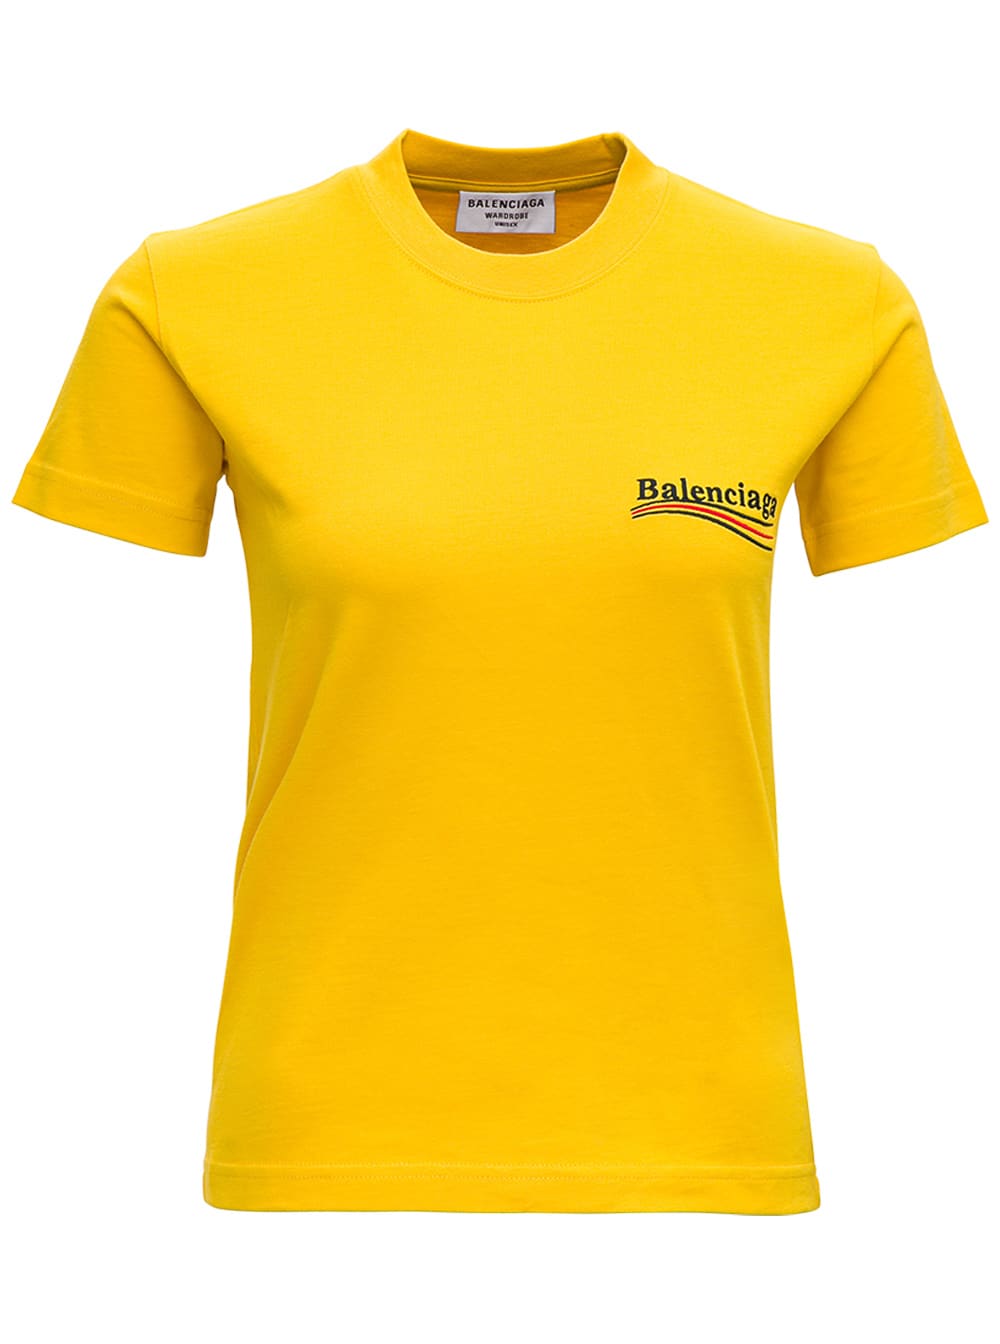 Balenciaga Political Campaign Yellow Jersey T-shirt